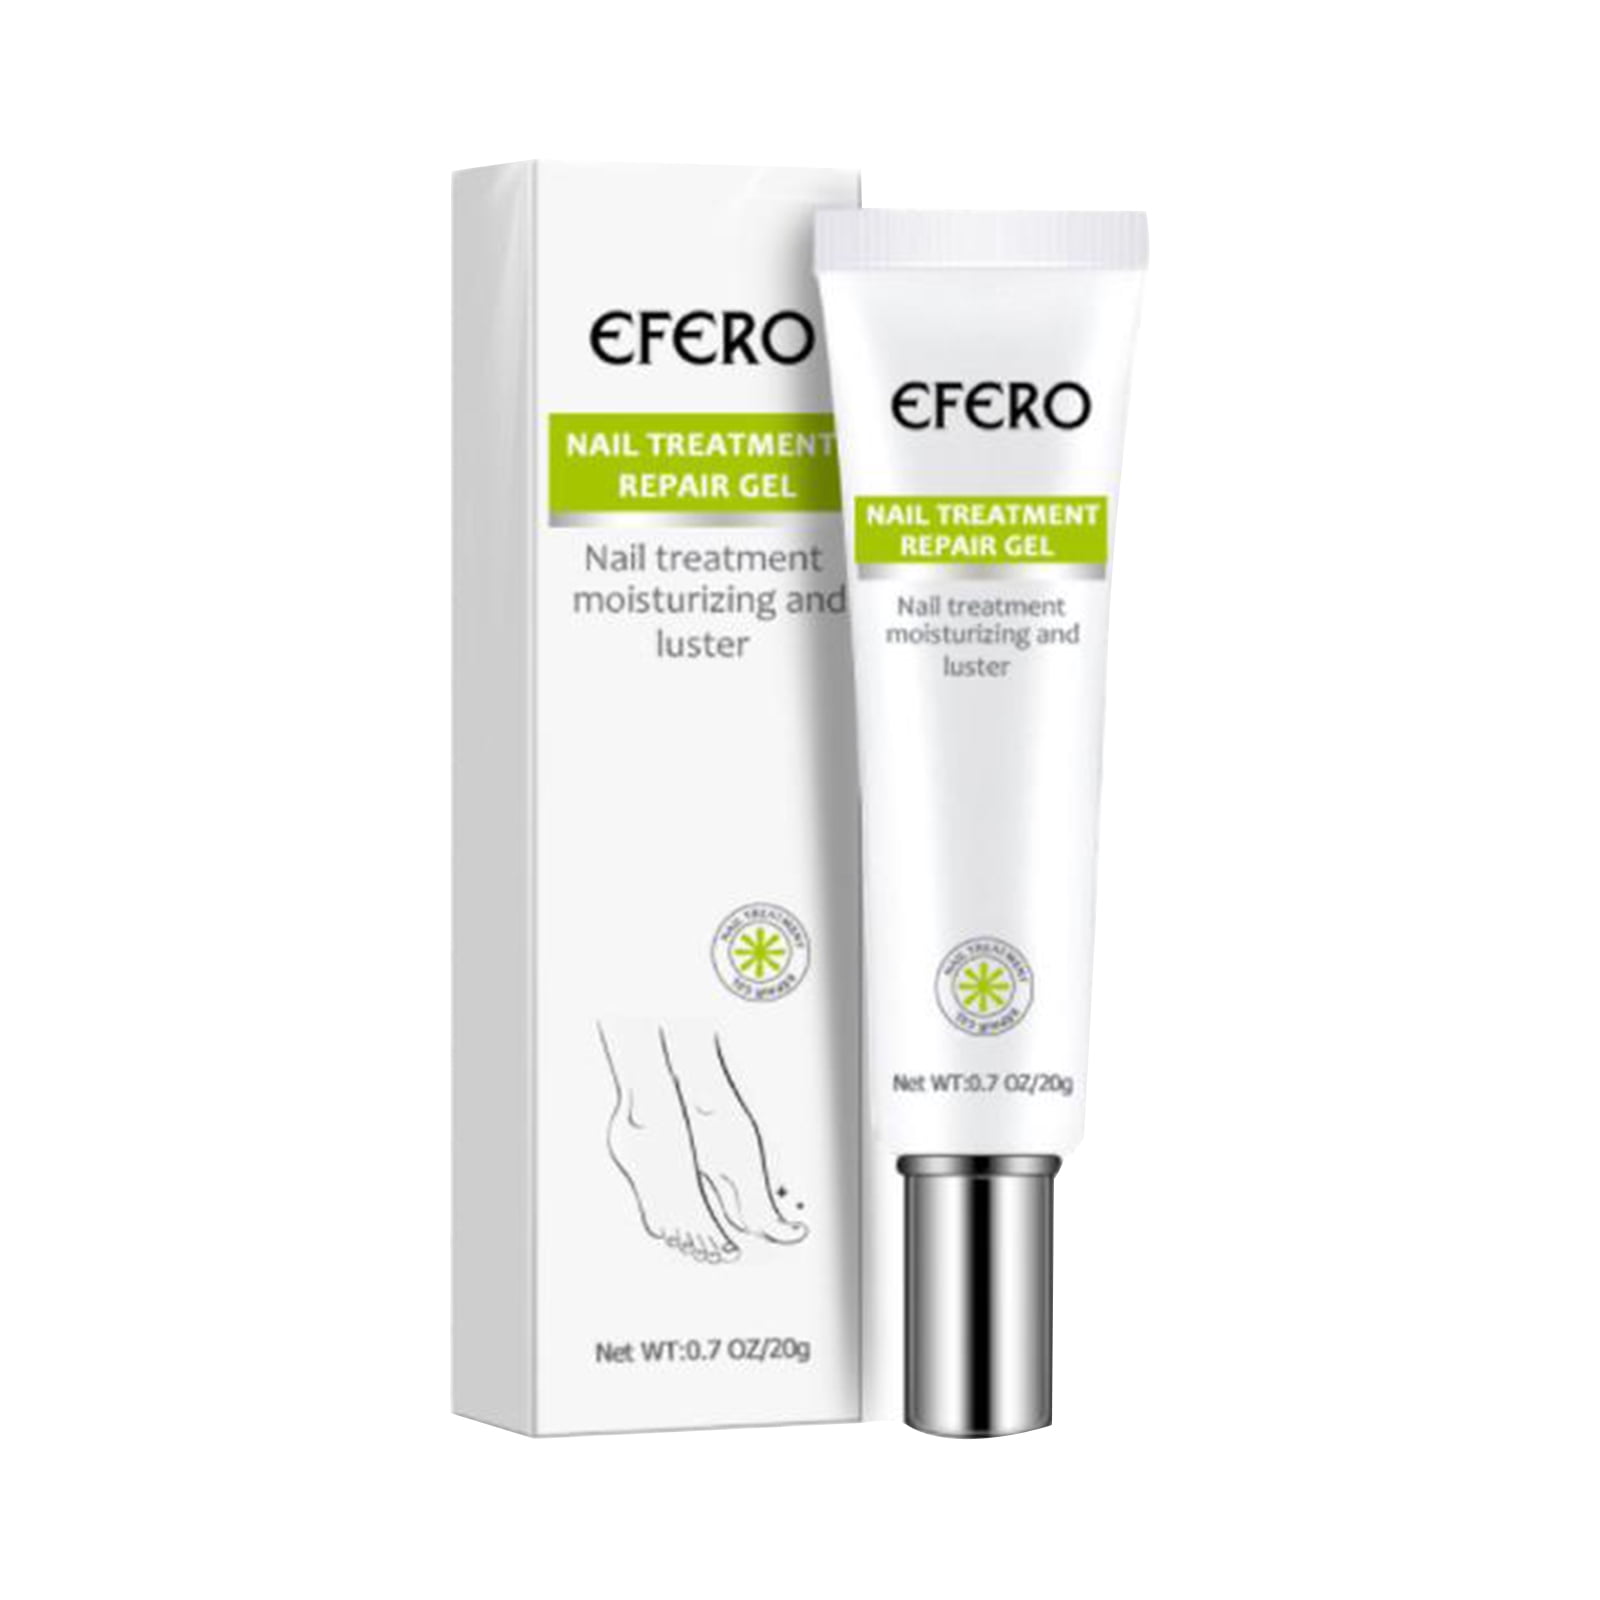 EFERO Anti Fungal Nail Gel Anti Infection Nails Treatment Hand Foot Cream Repair Toenail Remove Fungus Nails Essence Product 57ff0e5b 574d 449b a57f 21e032667c34.b8e1e16b34f837d155a4af46bcec9d93